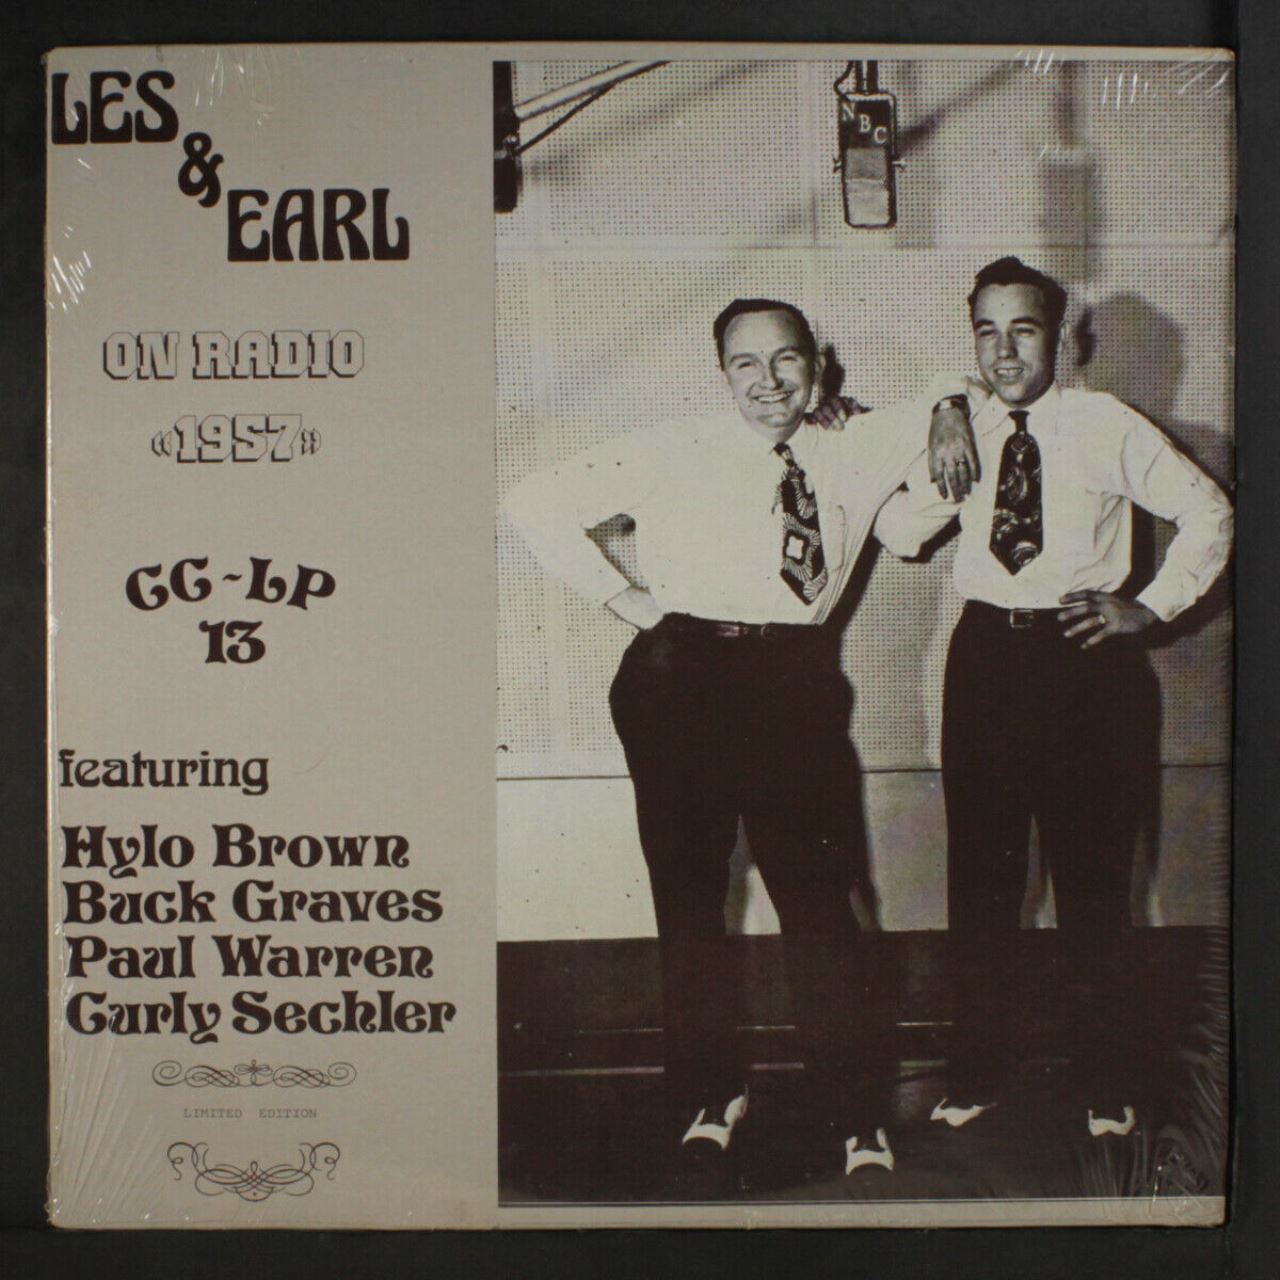 Lester Flatt & Earl Scruggs – On Radio cover album